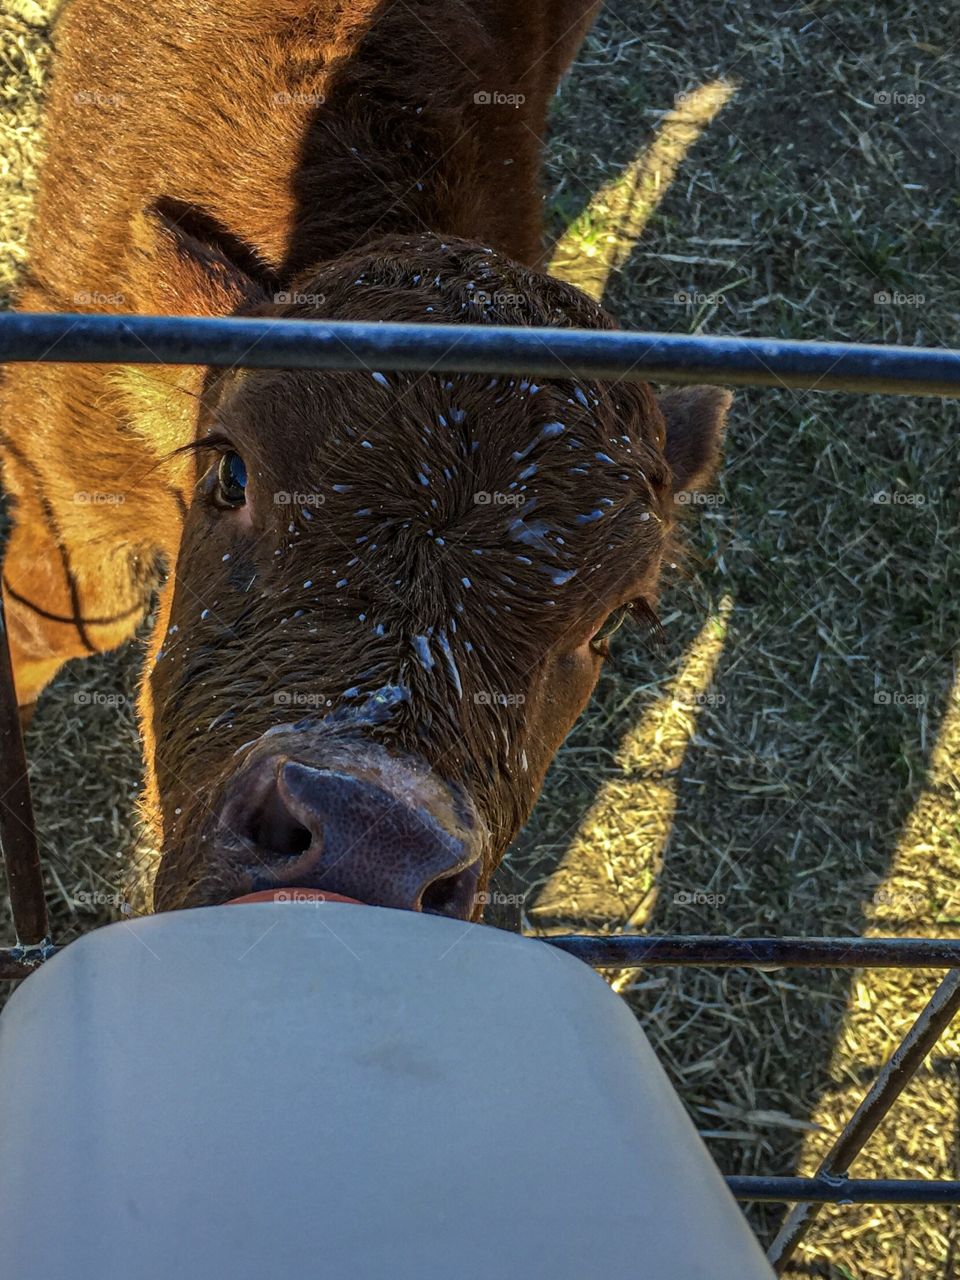 Baby calf drinking his milk cute, adorable, heartwarming 